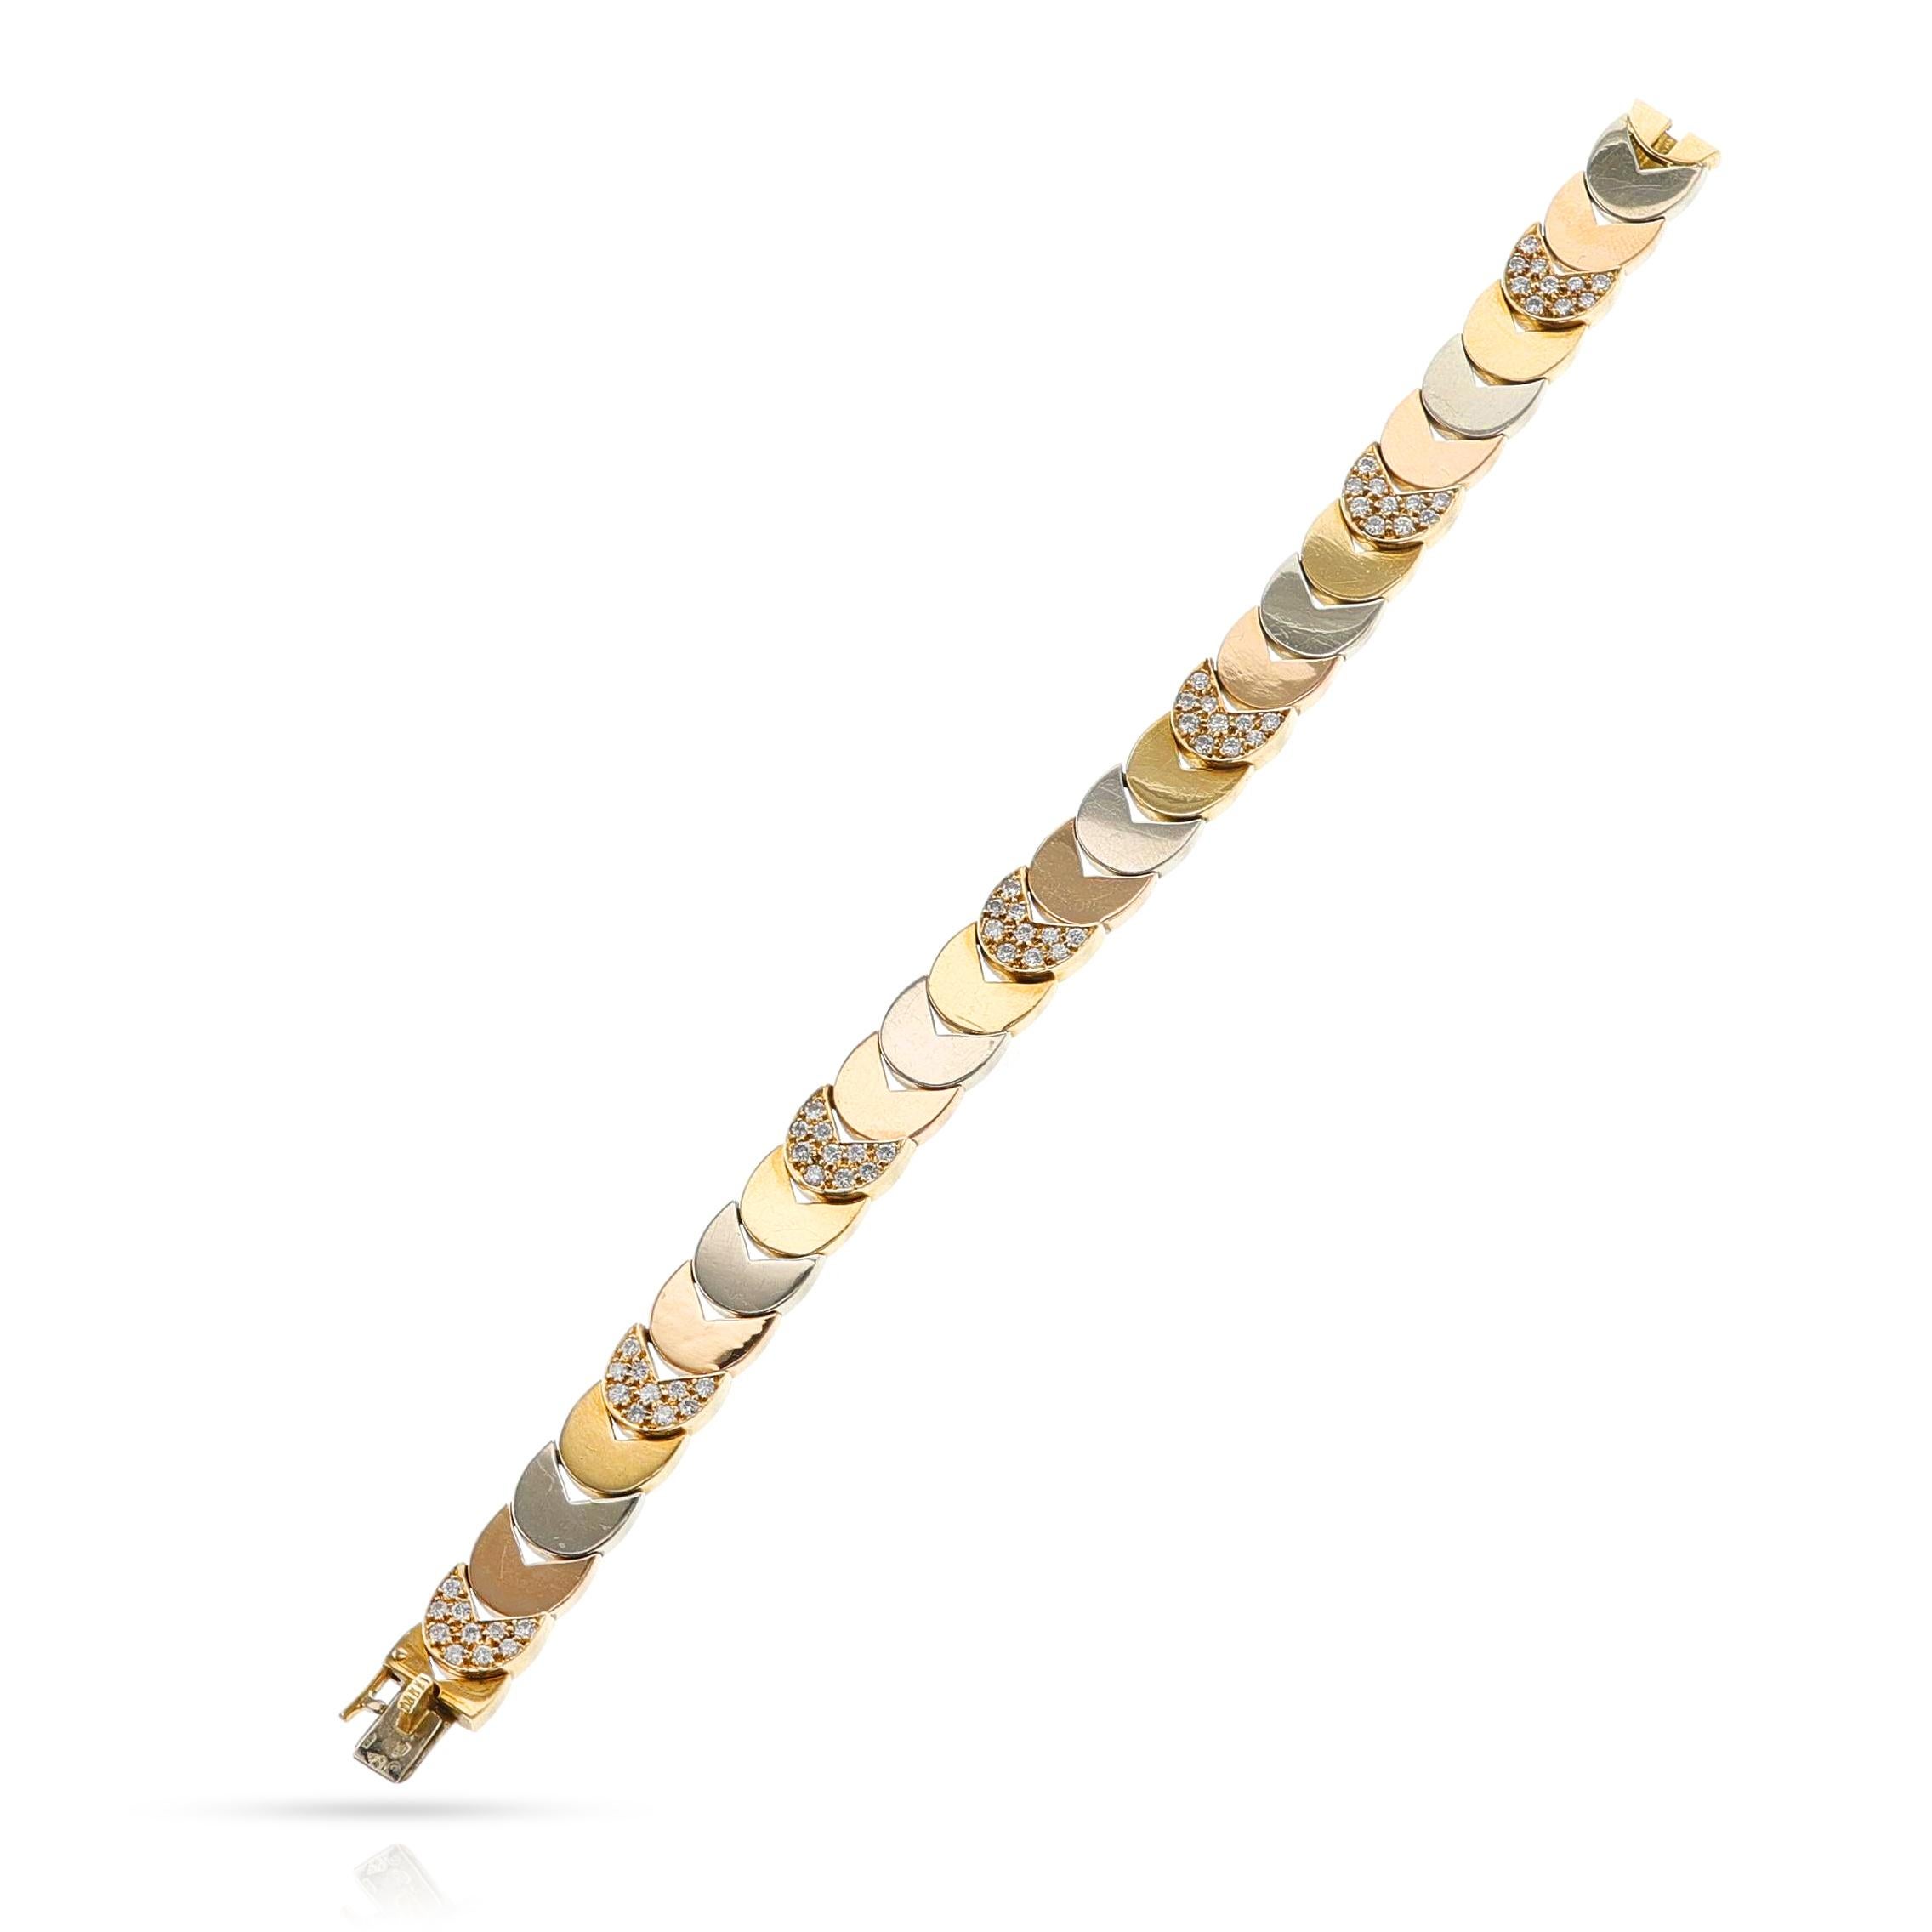 A Van Cleef & Arpels Tri-Color Gold and Diamond Bracelet by Georges L'enfant, 18k. Length 7.09 inches (18 cm). The total weight is 37.03 grams. Signed Numbered. Jeweler's Hallmark: Georges L'enfant.

SKU: 1458-EAJAPLWU